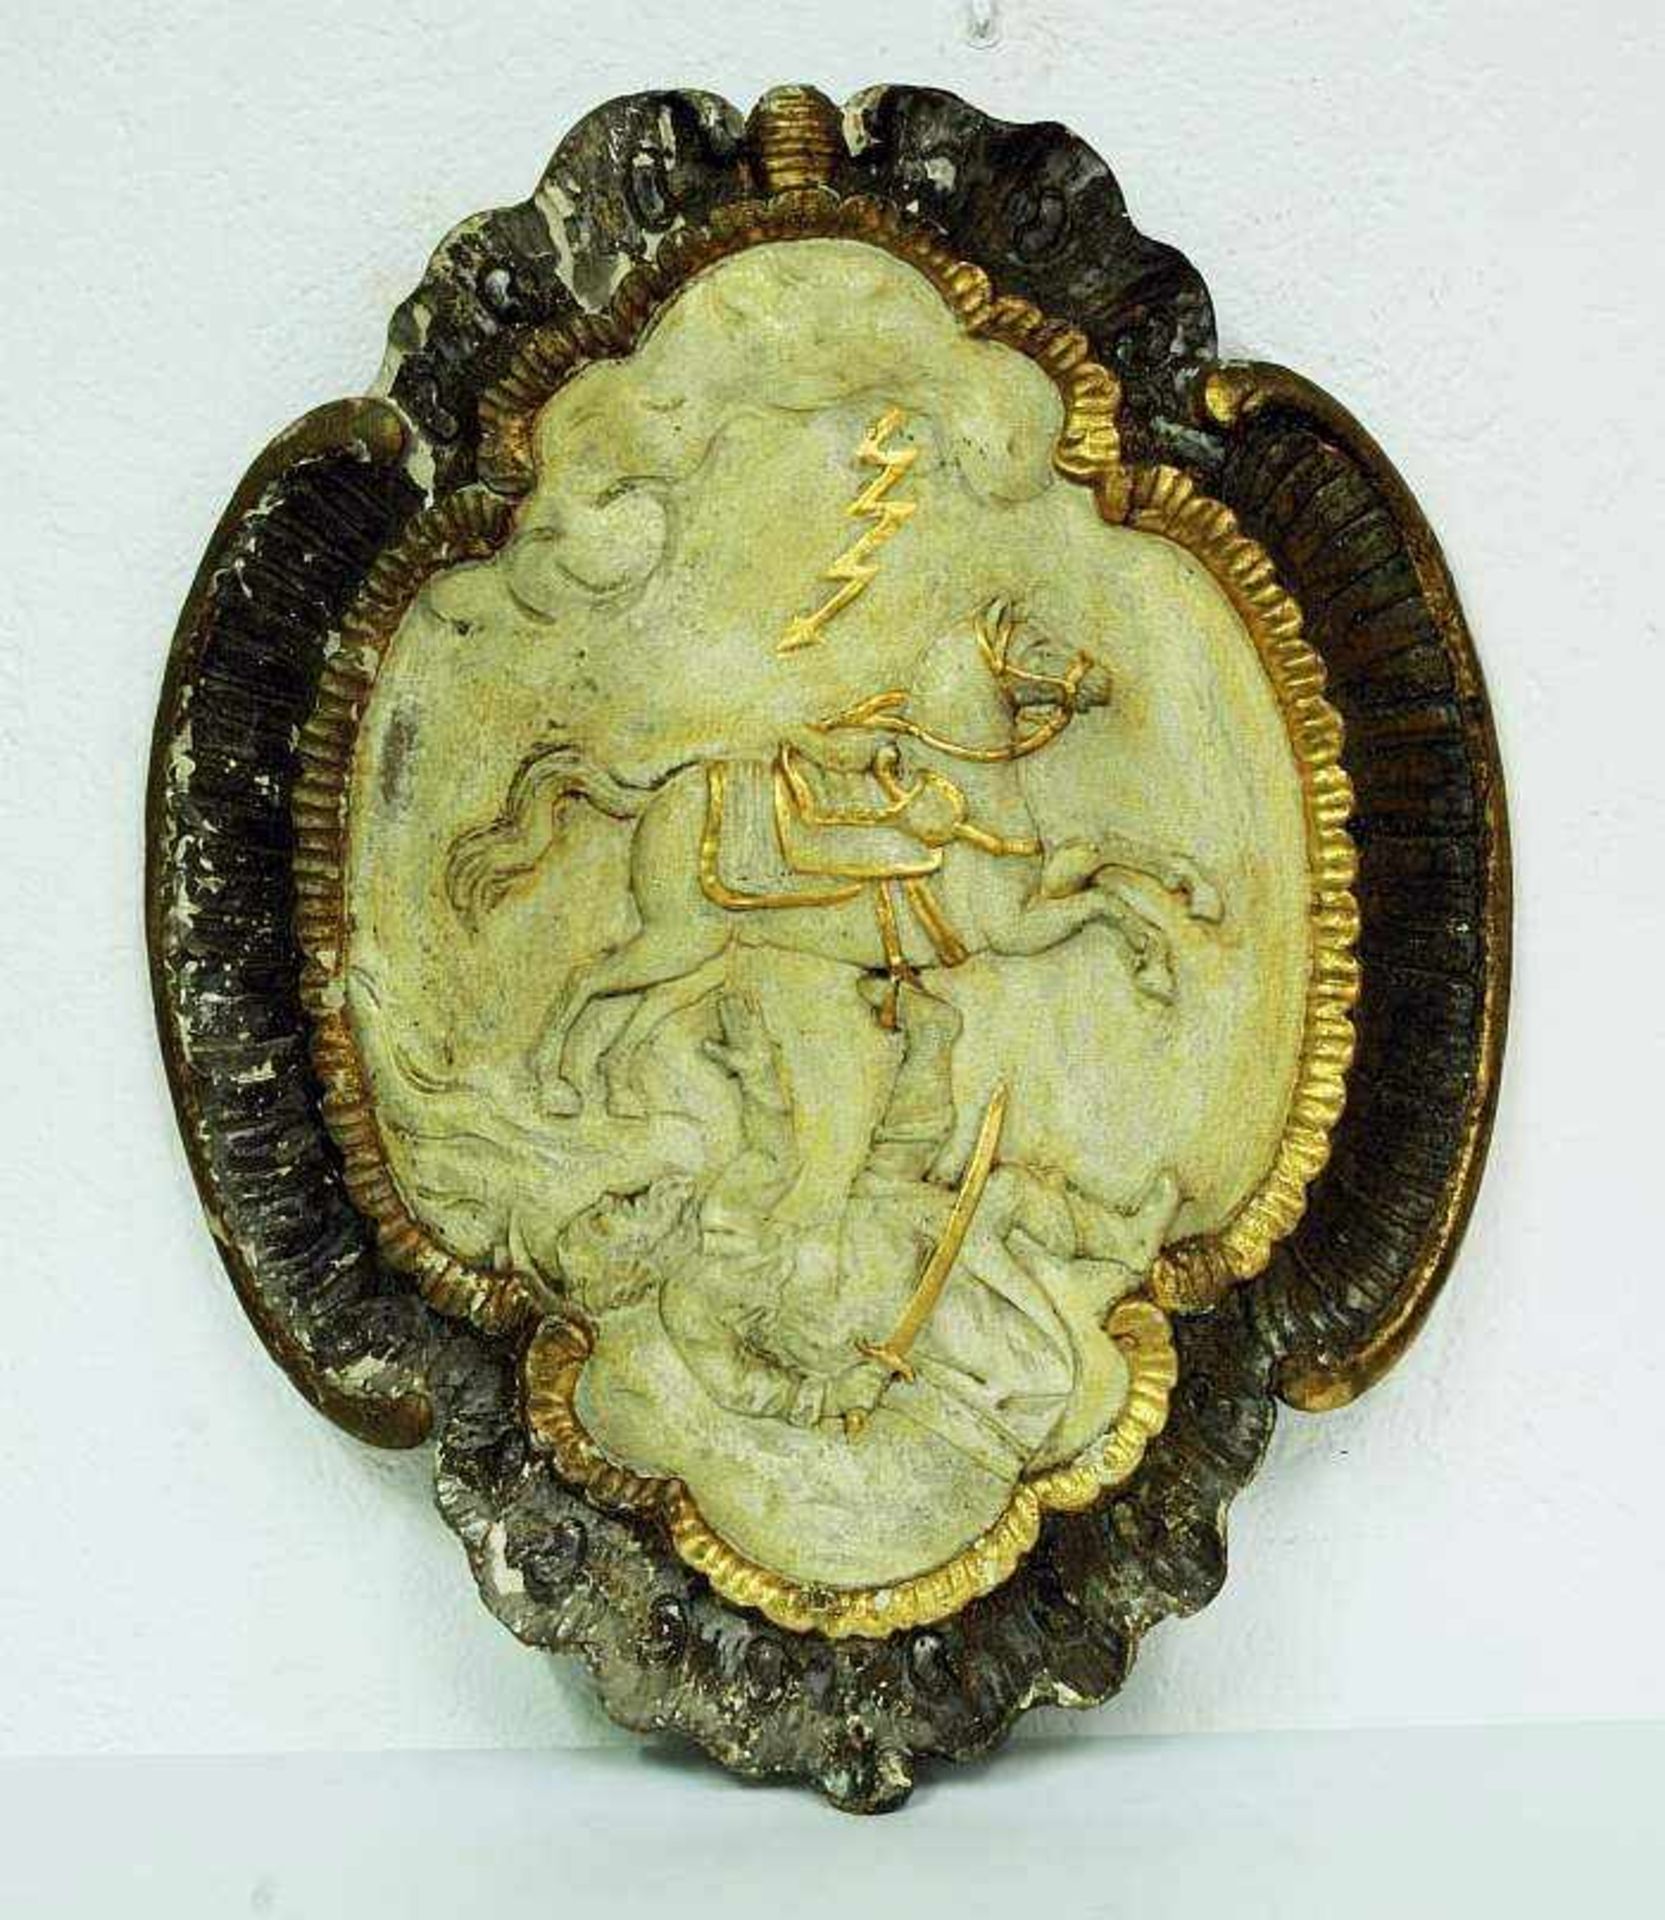 Barockkartusche, 18. Jahrhundert. Barockkartusche, 18. Jahrhundert. In Kartusche dargestellte